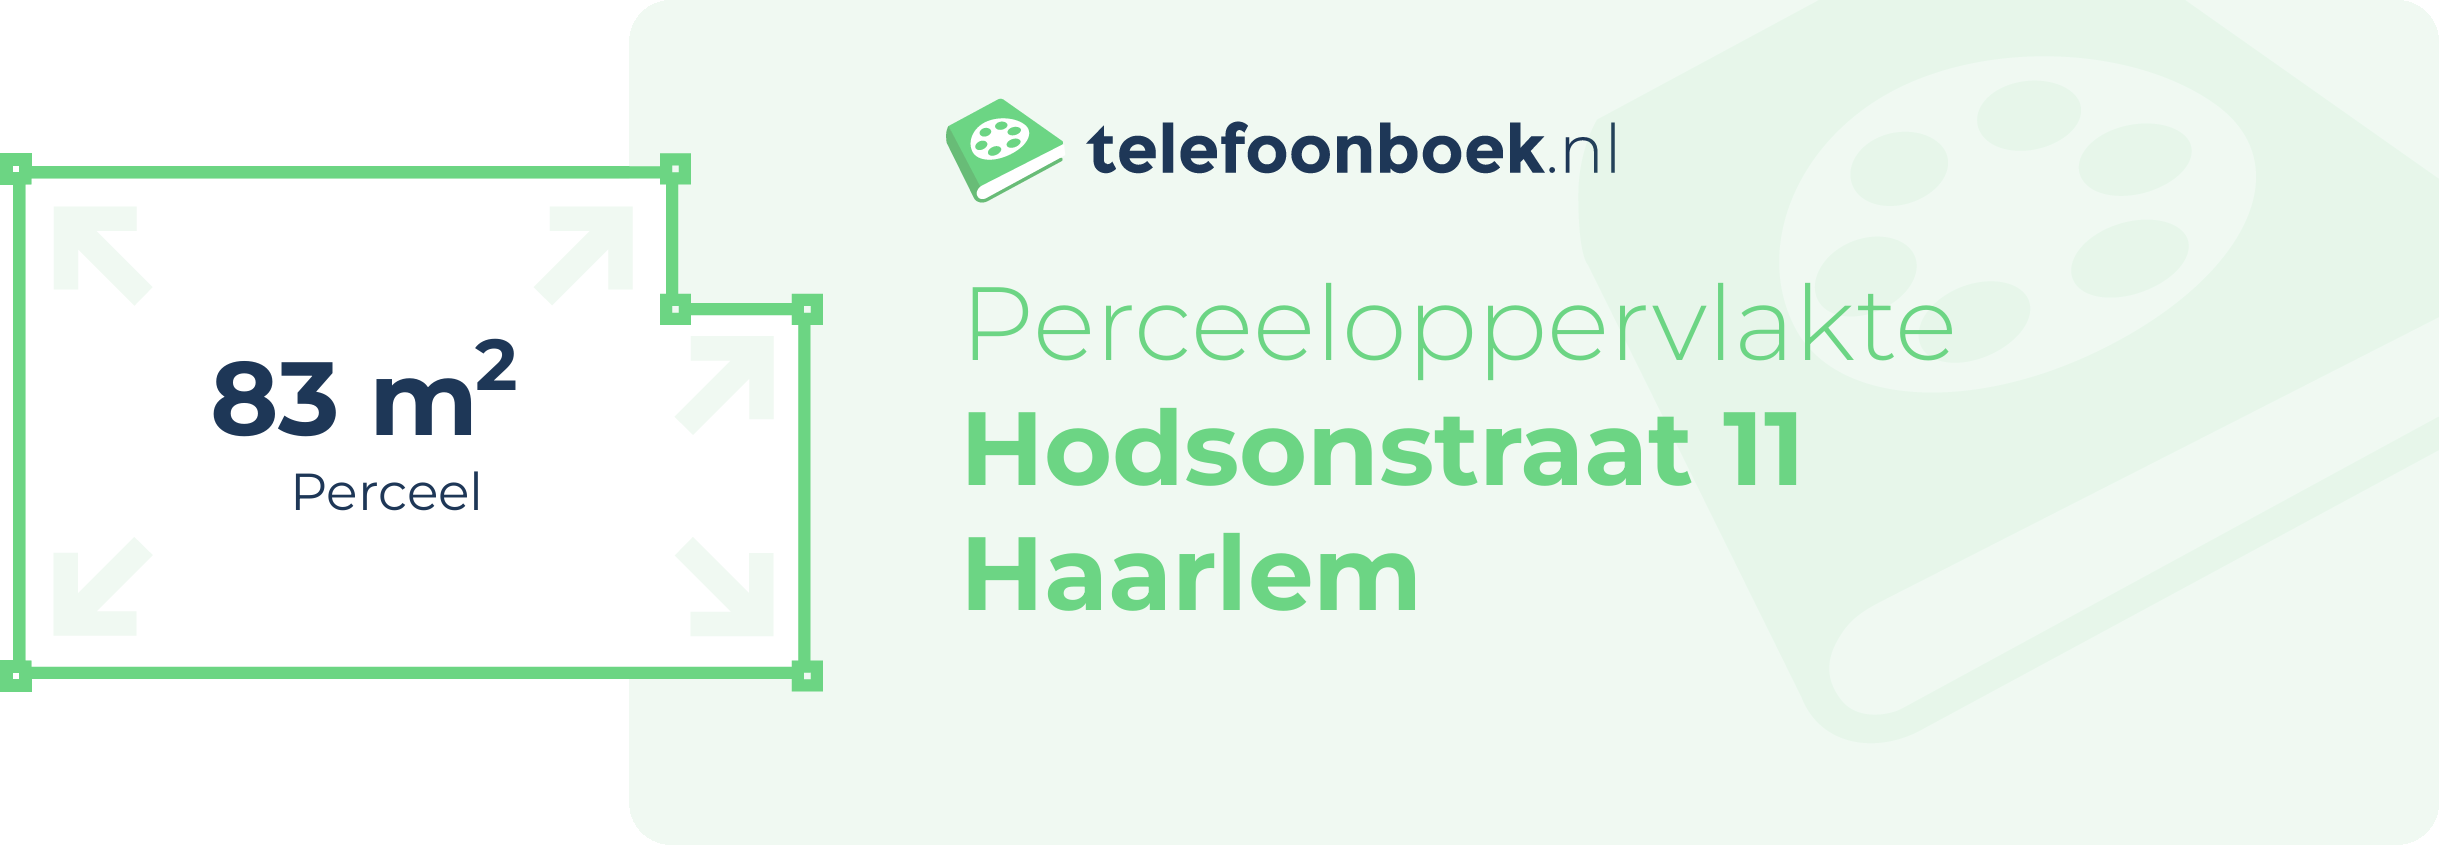 Perceeloppervlakte Hodsonstraat 11 Haarlem